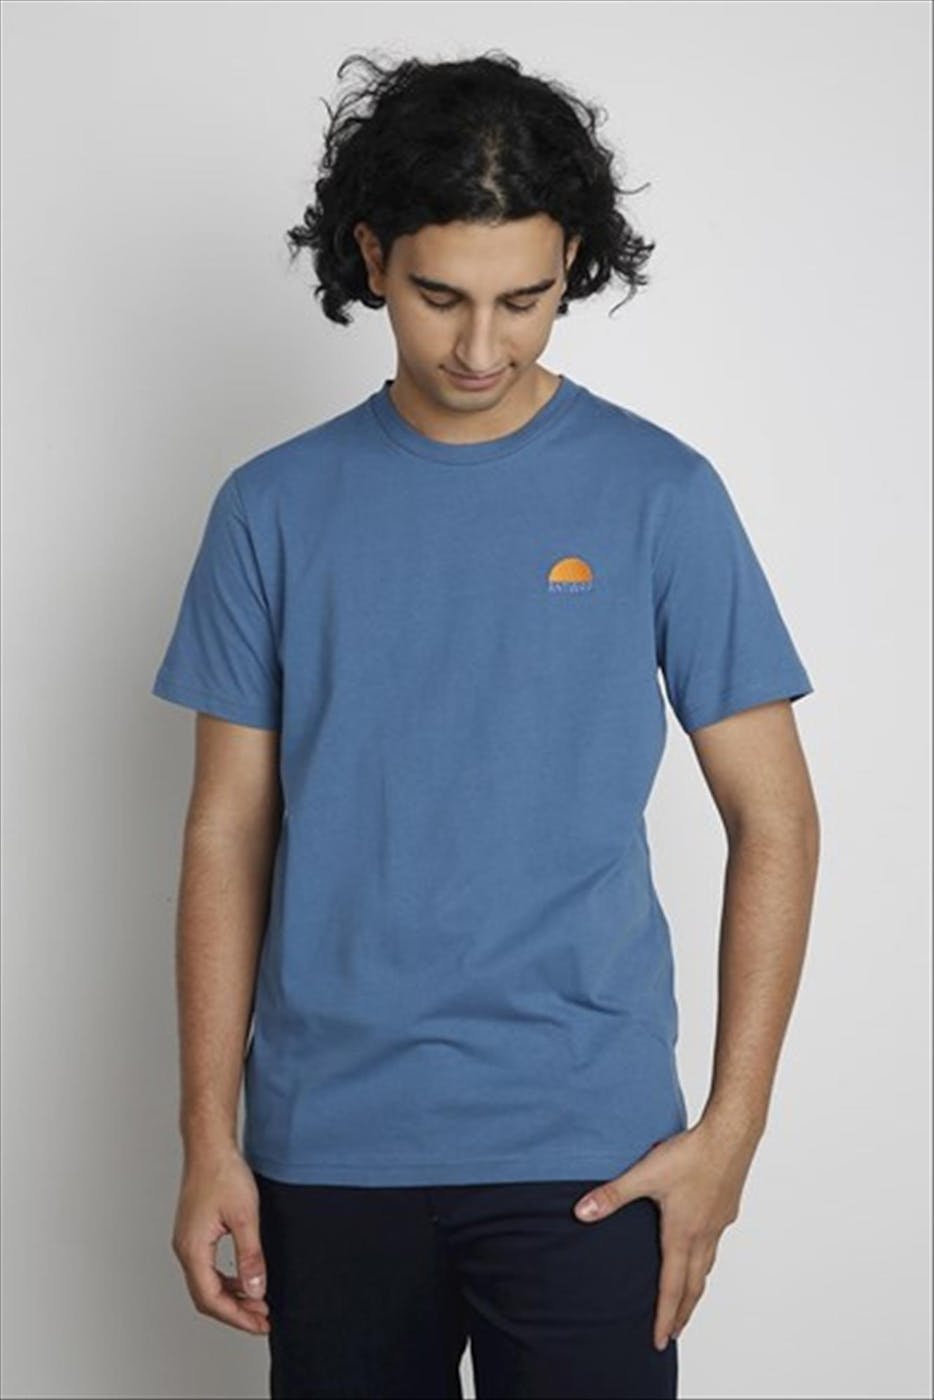 Antwrp - Grijsblauwe Sun & Beach T-shirt